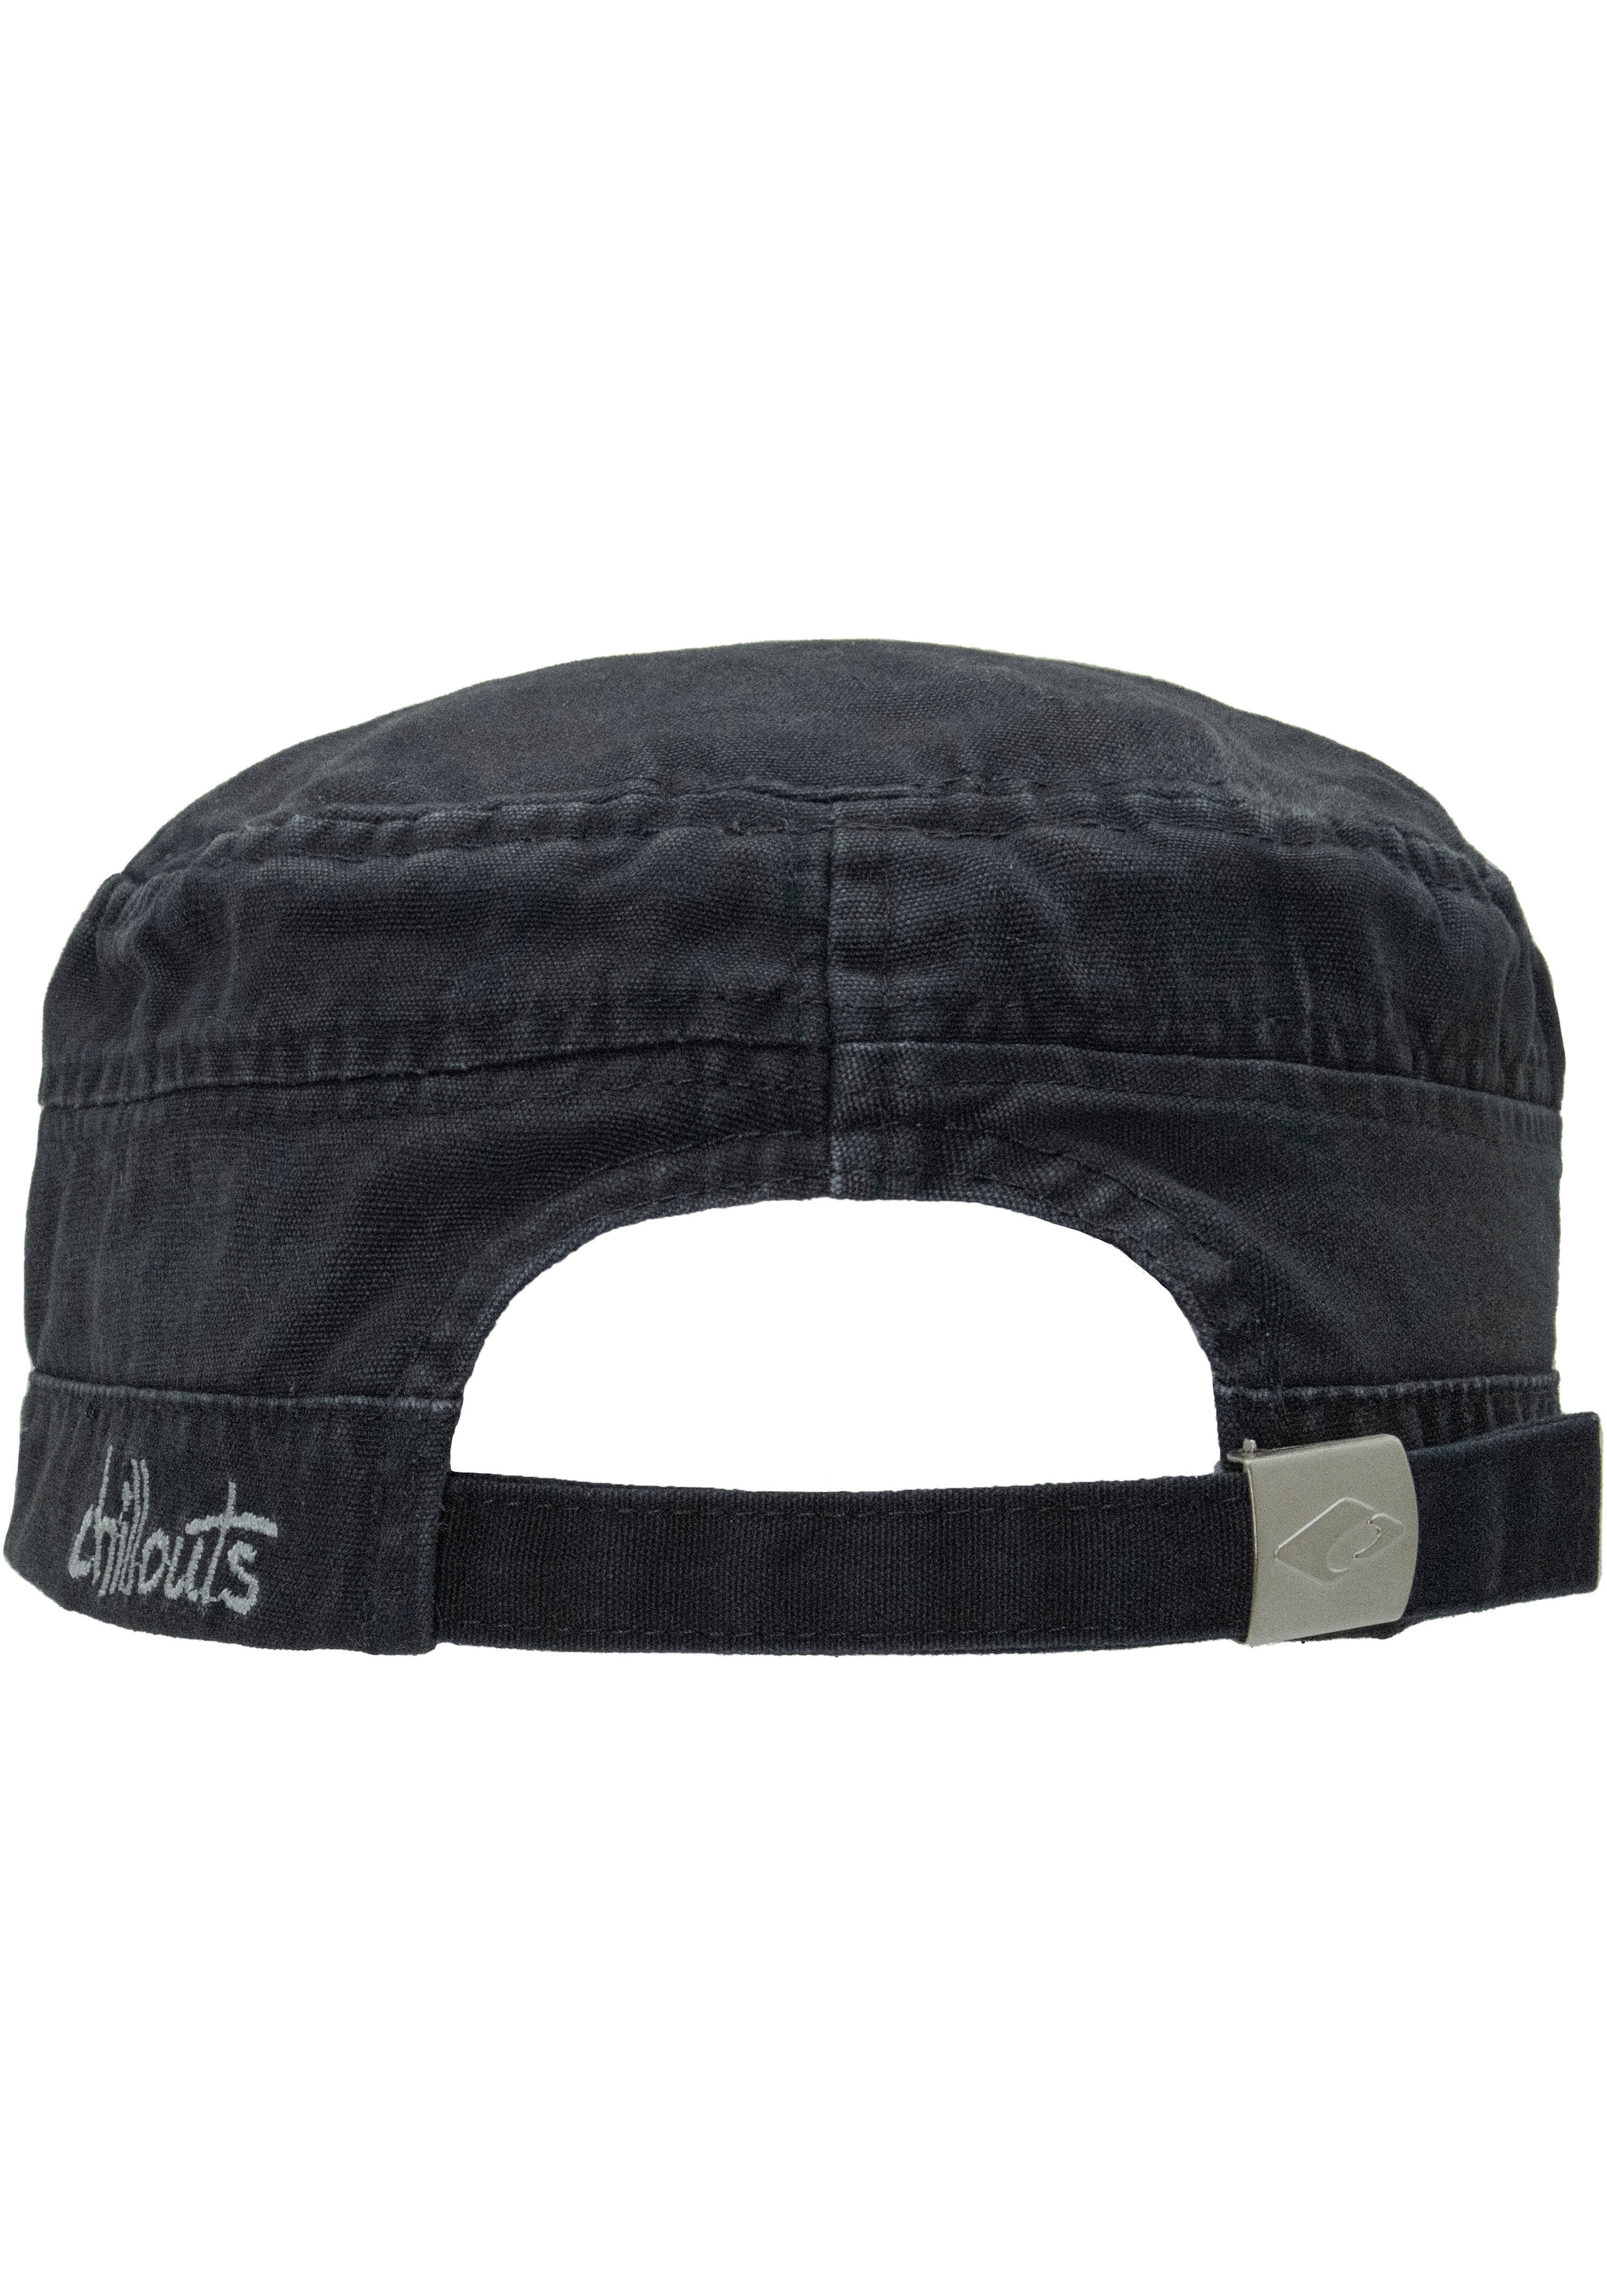 chillouts Army Cap »El Paso Hat«, Baumwolle, One online Size reiner shoppen aus atmungsaktiv, bei OTTO